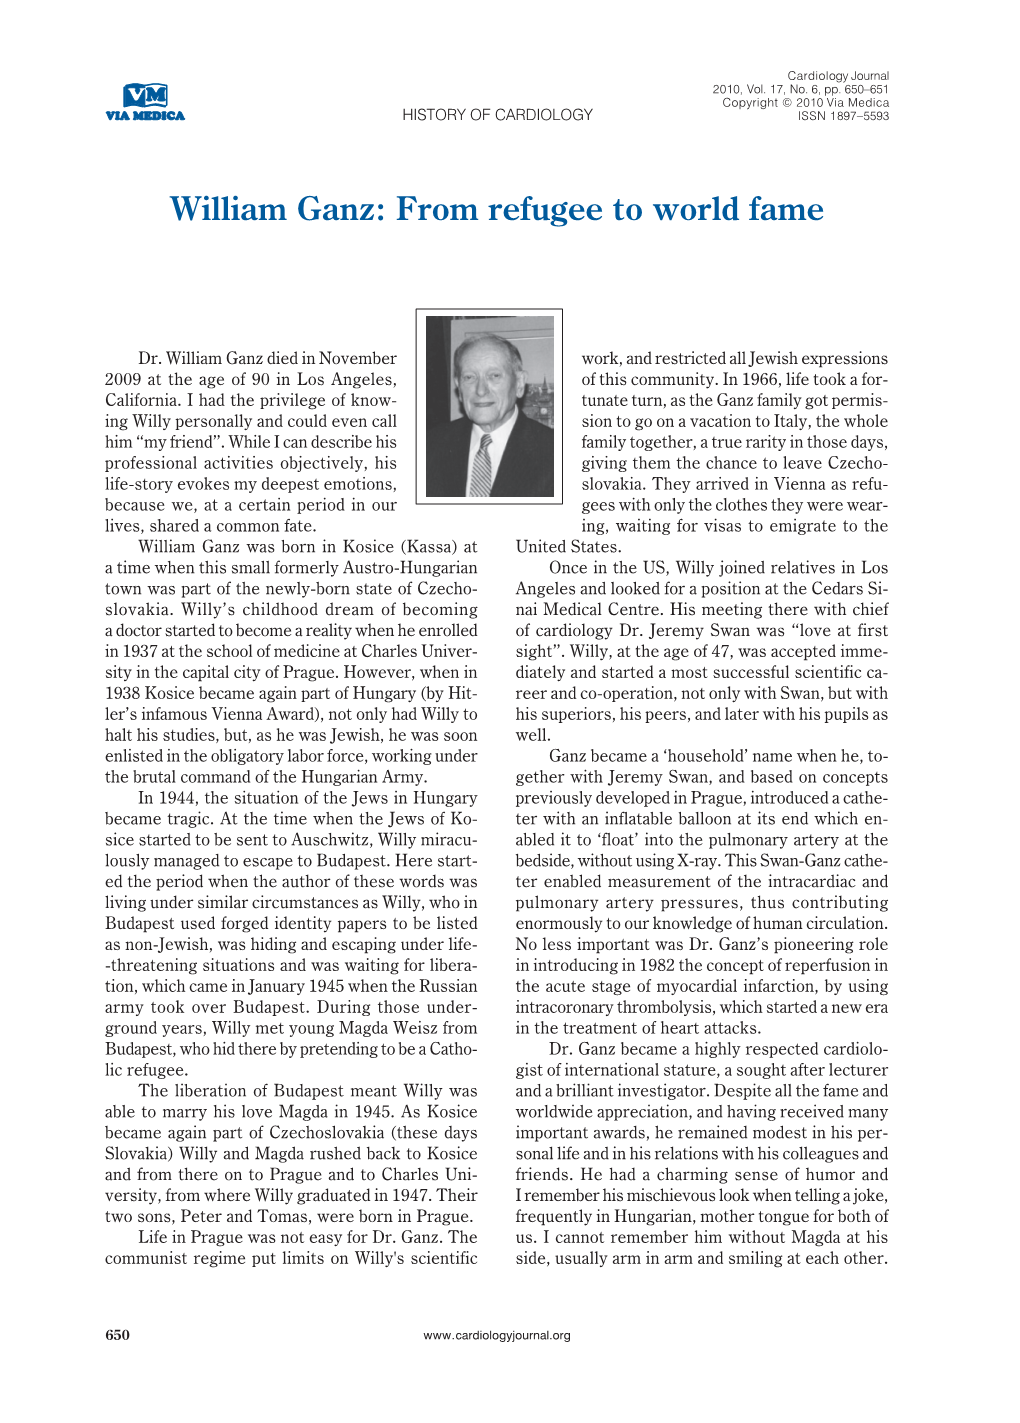 William Ganz: from Refugee to World Fame